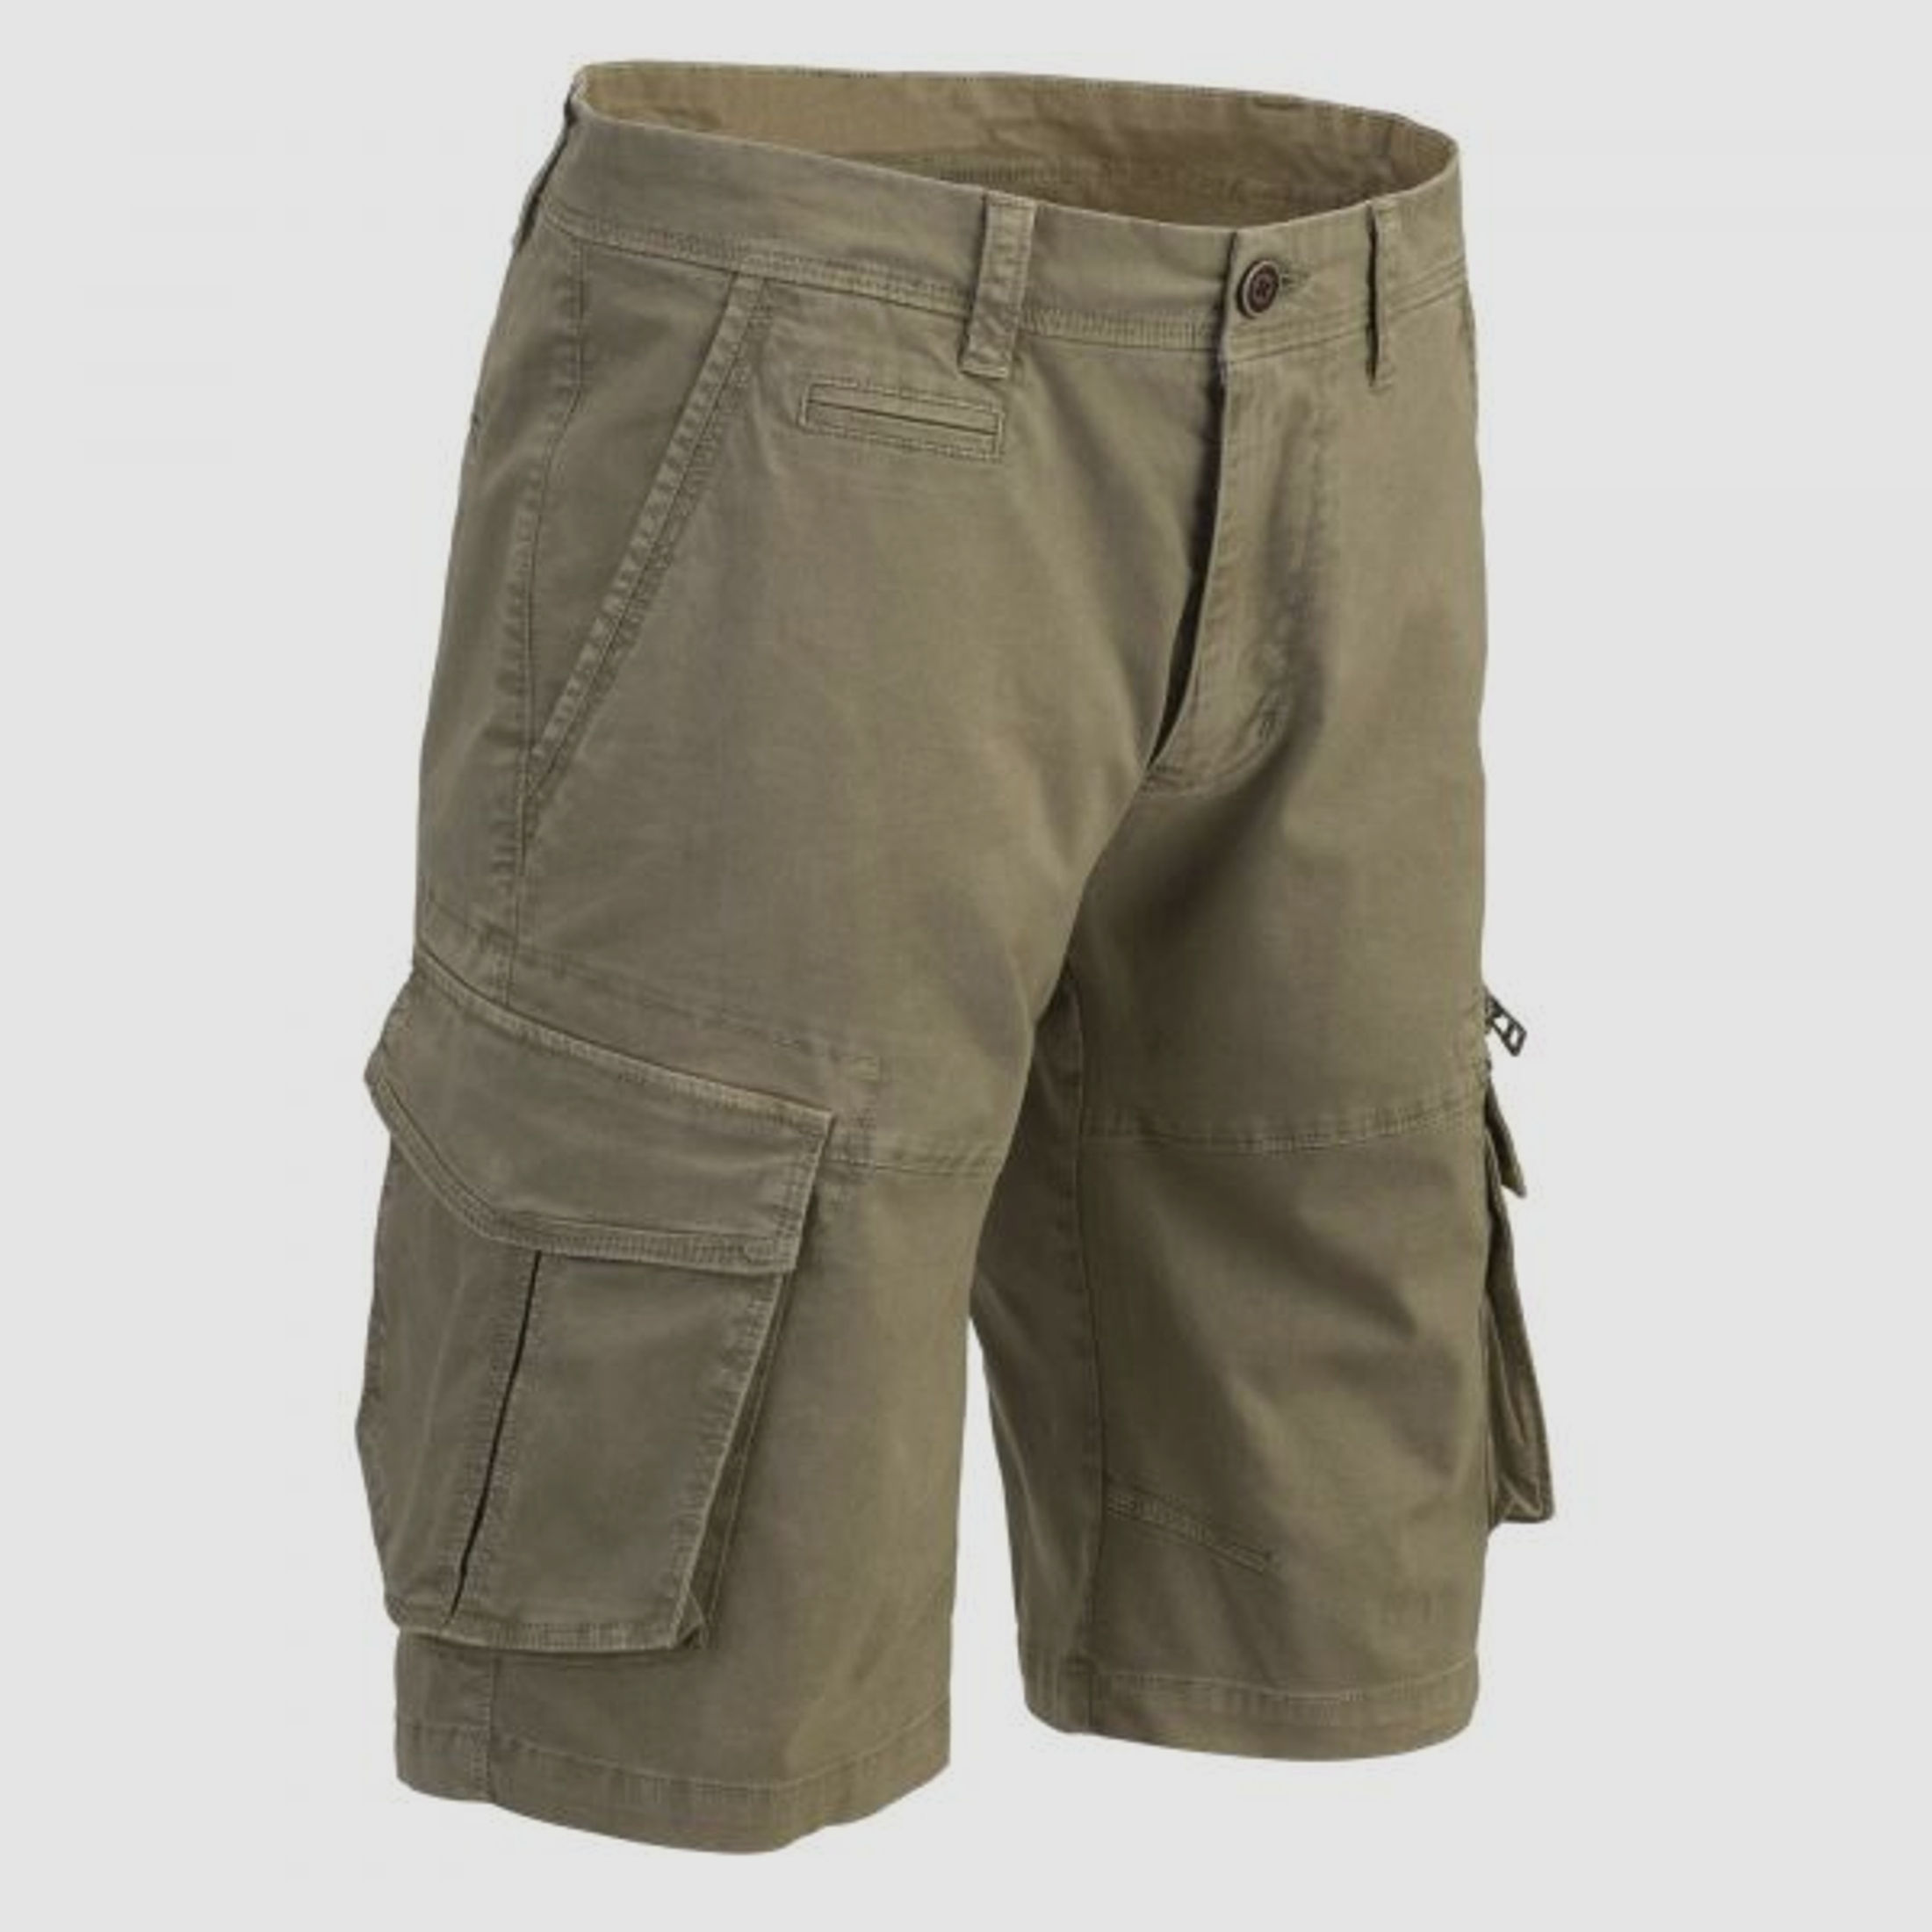 Defcon 5 Defcon 5 Shorts Cargo Pant light khaki